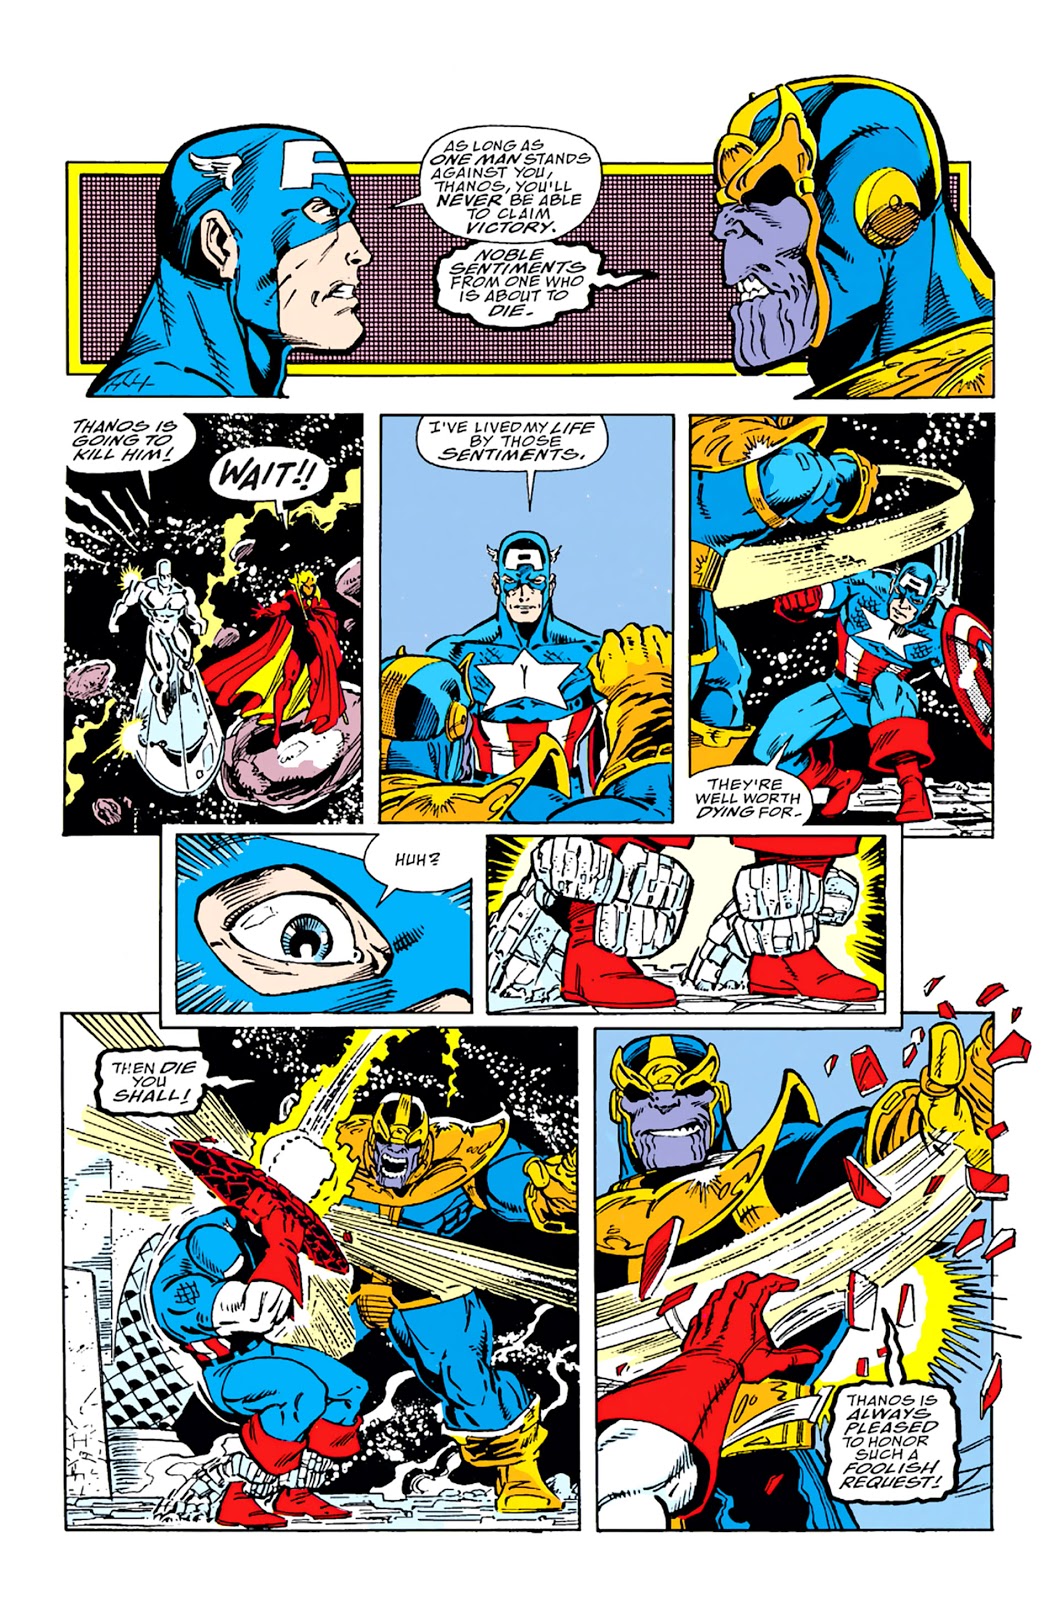 Captain America vs Thanos